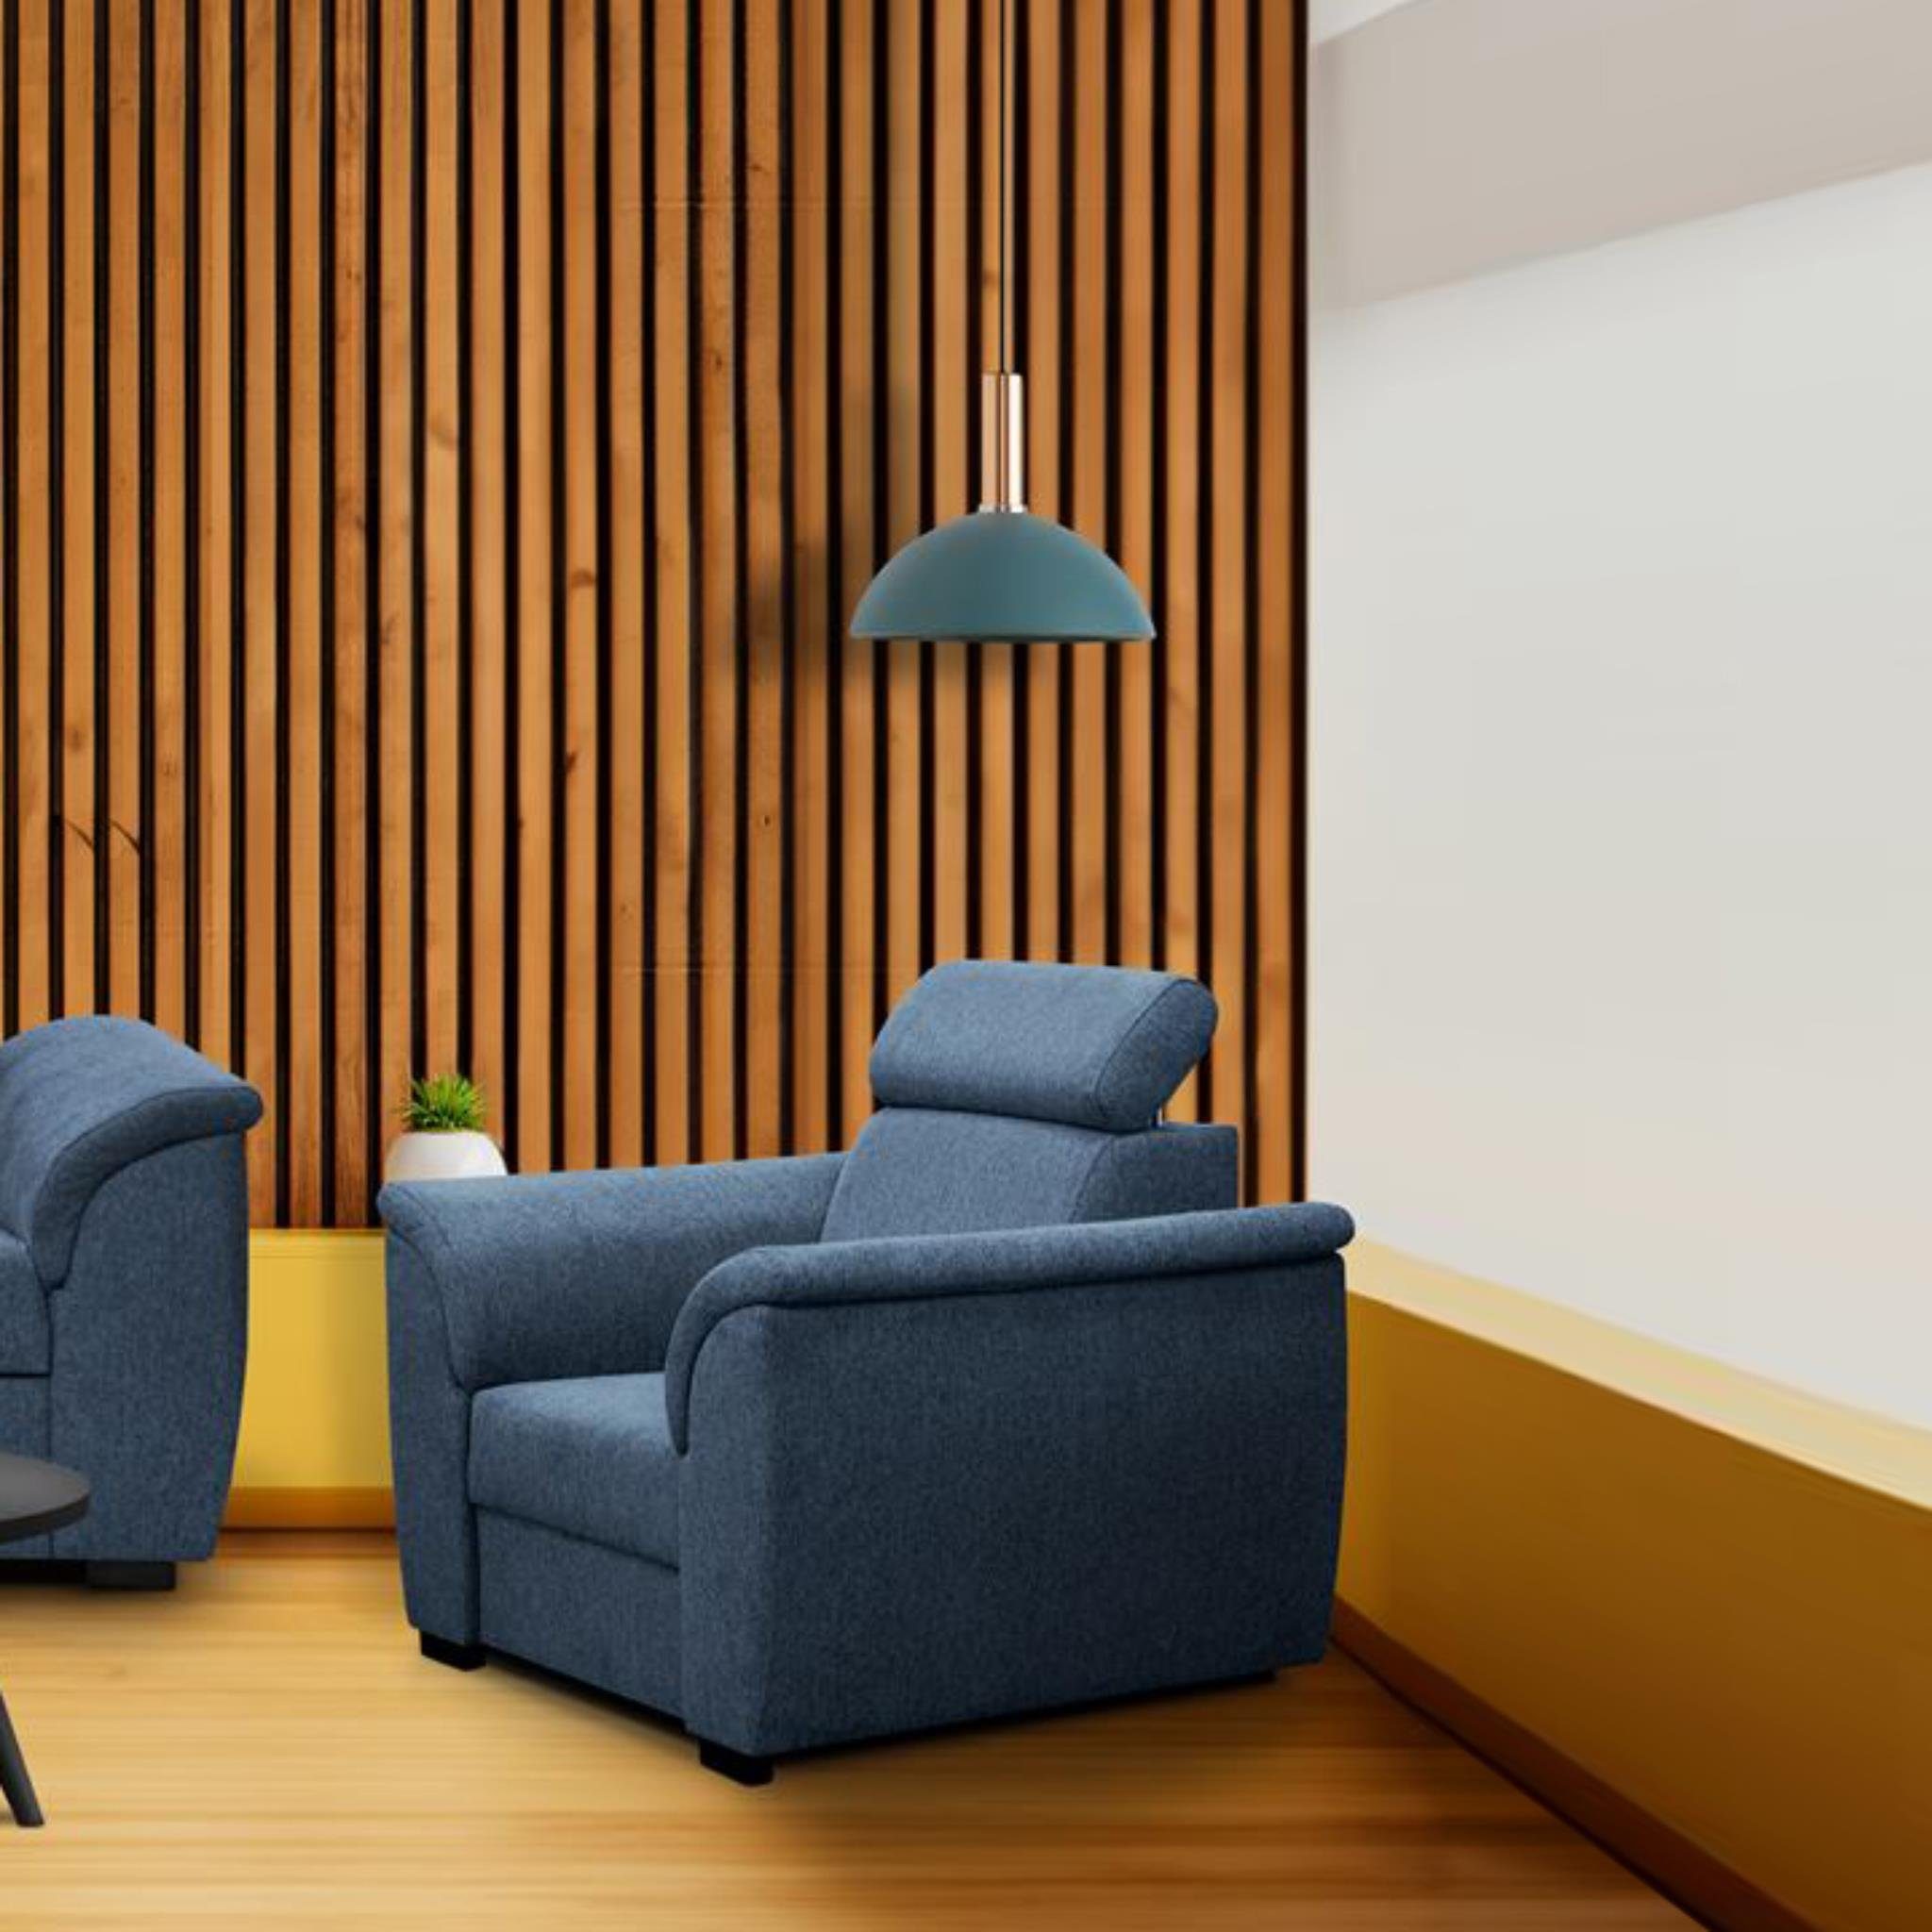 Beautysofa Relaxsessel Madera (modern Lounge Polstersessel mit Wellenfedern), stilvoll Sessel mit verstellbare Kopfstütze Blau (matana 12)